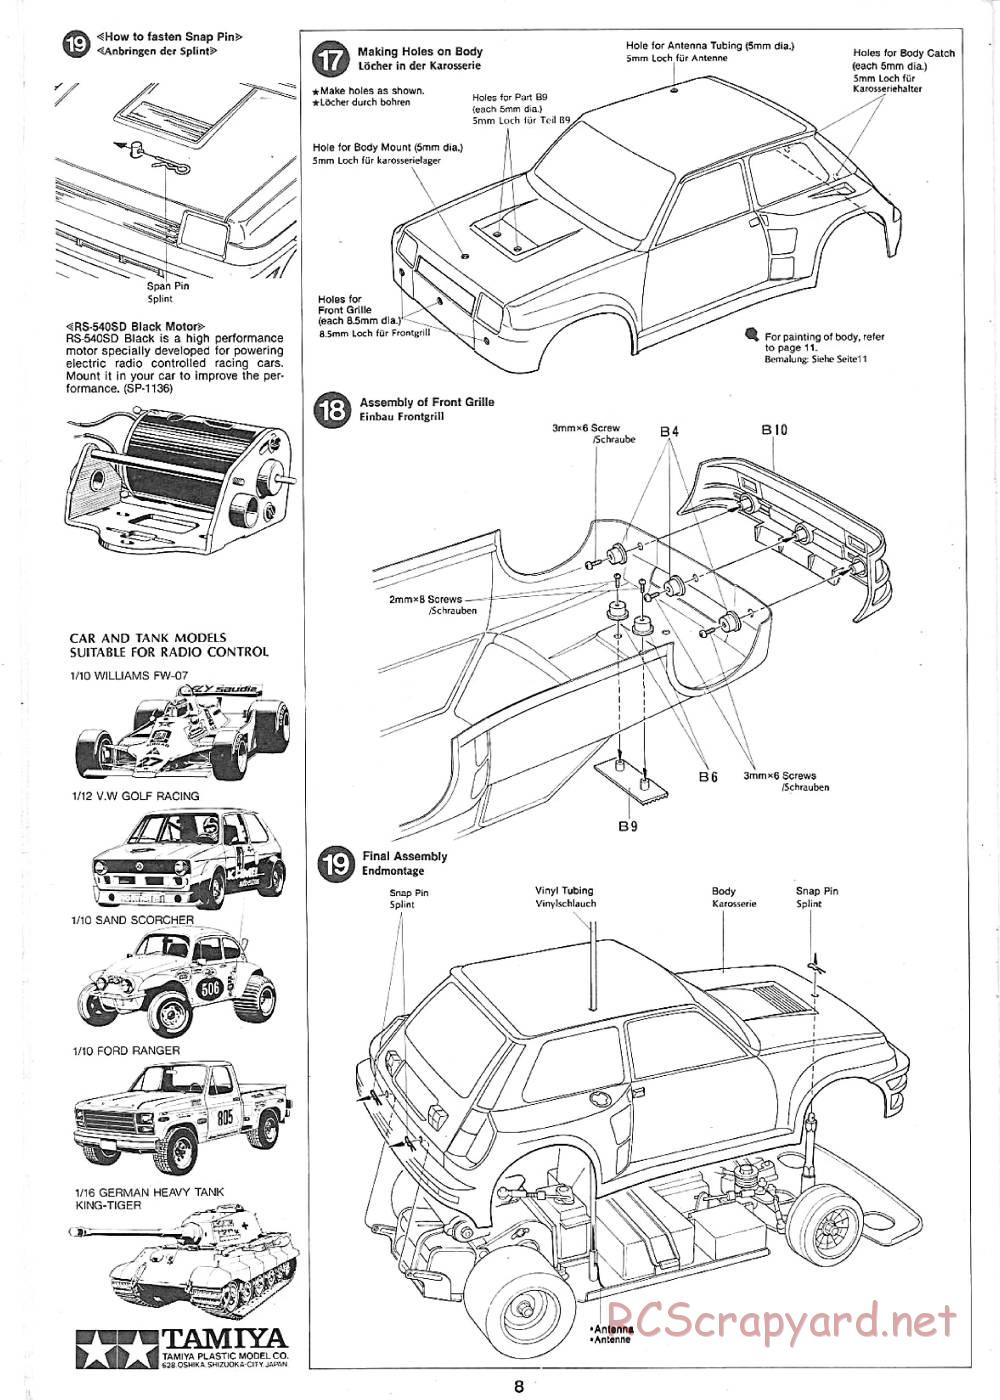 Tamiya - Renault 5 Turbo (CS) - 58026 - Manual - Page 8